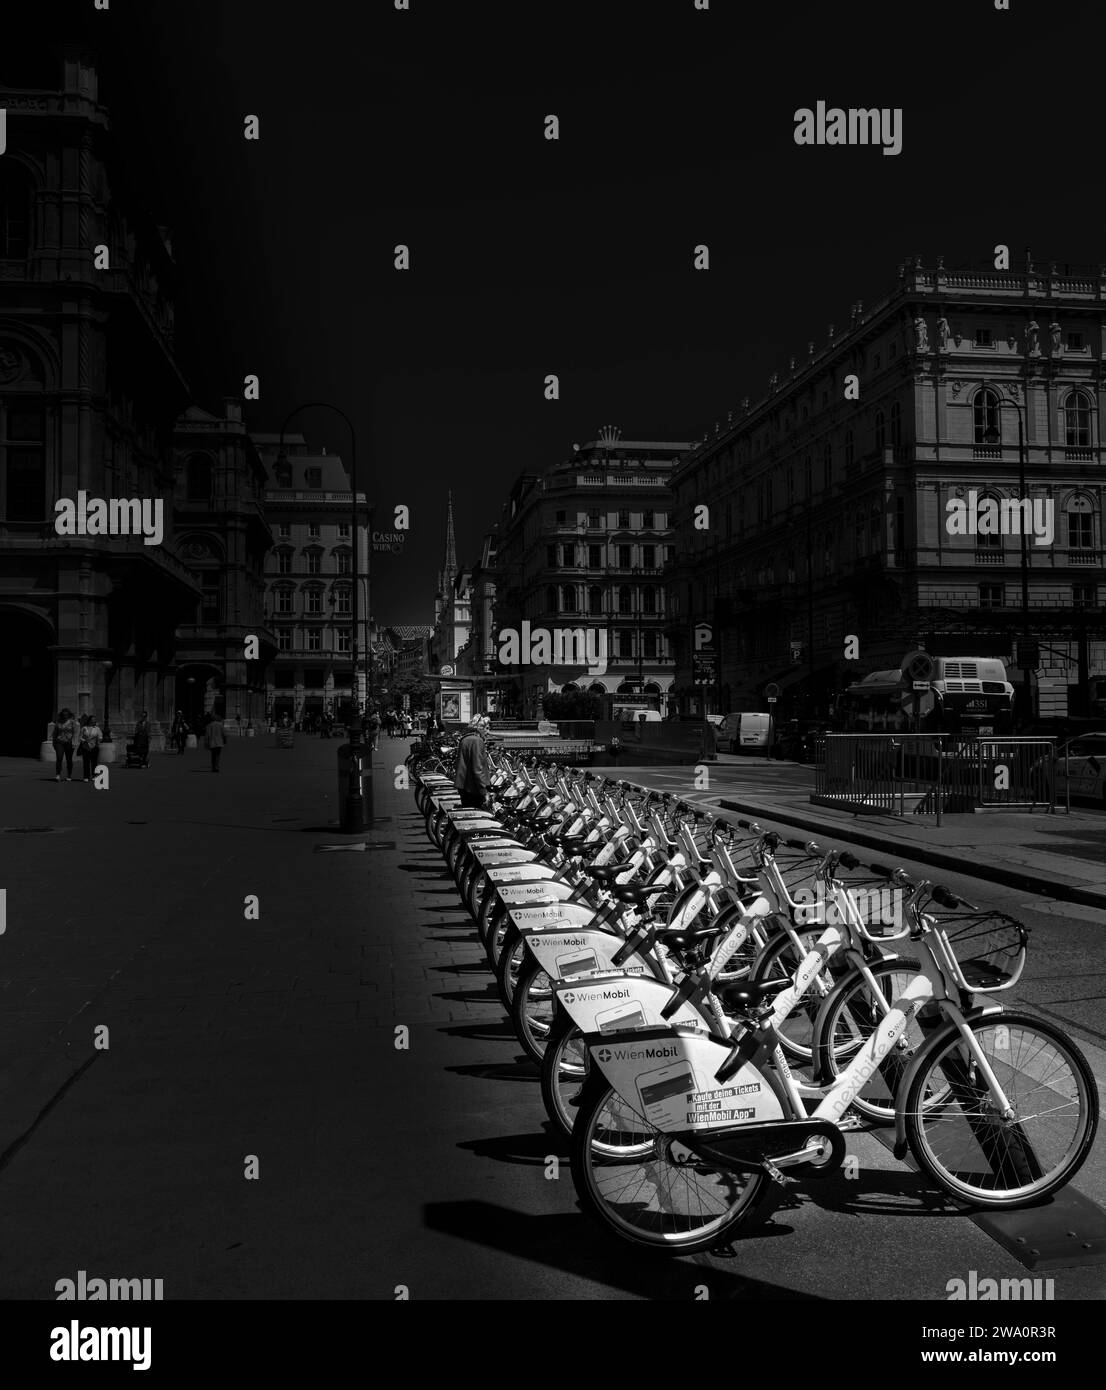 Black and white photography, Wien Mobil, car park for rental bikes, Vienna, Austria, Europe Stock Photo